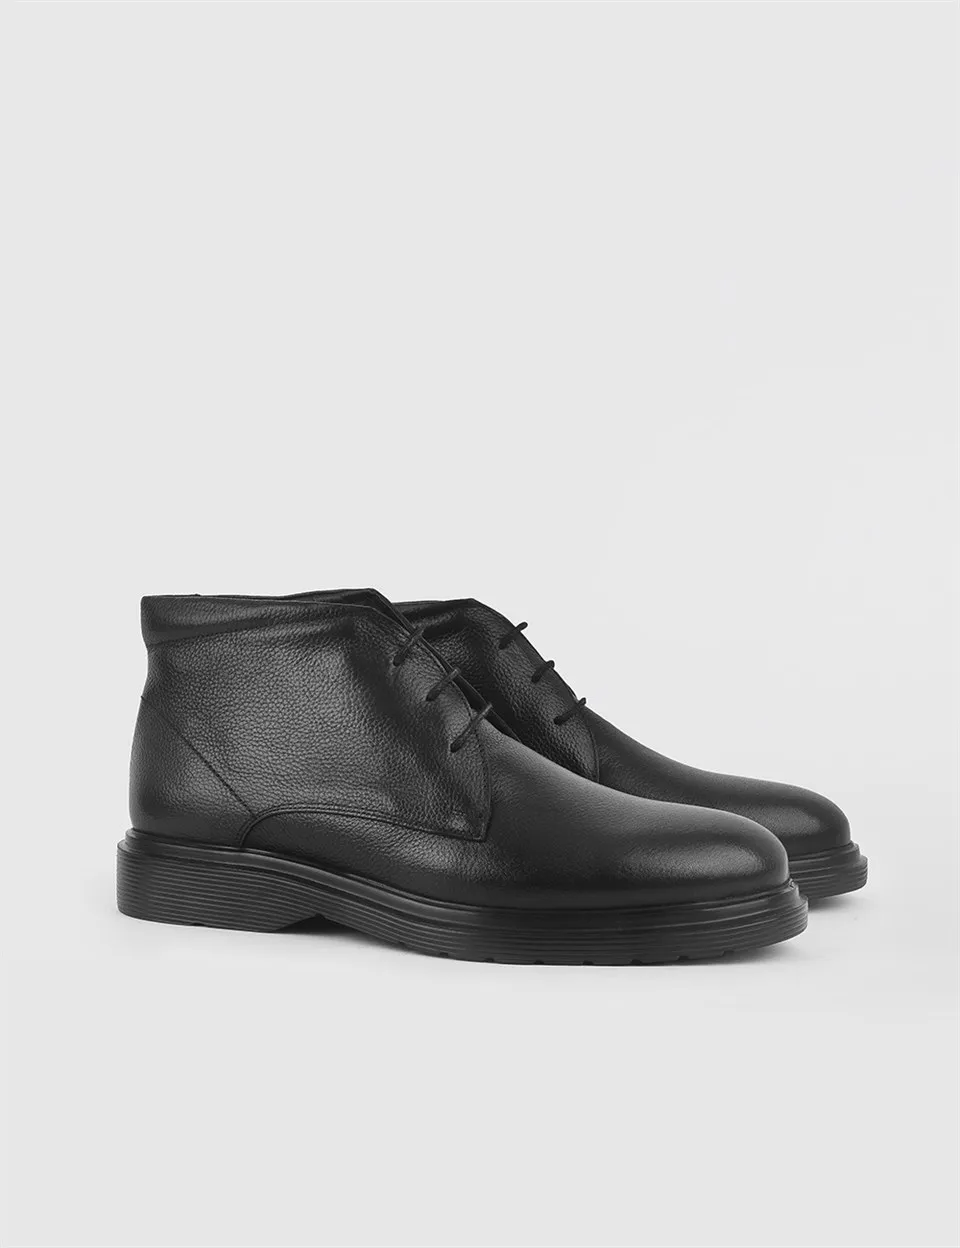 

ILVi-Genuine Leather Handmade Arline Black Floater Leather Men's Boot Men Shoes 2021 Fall/Winter